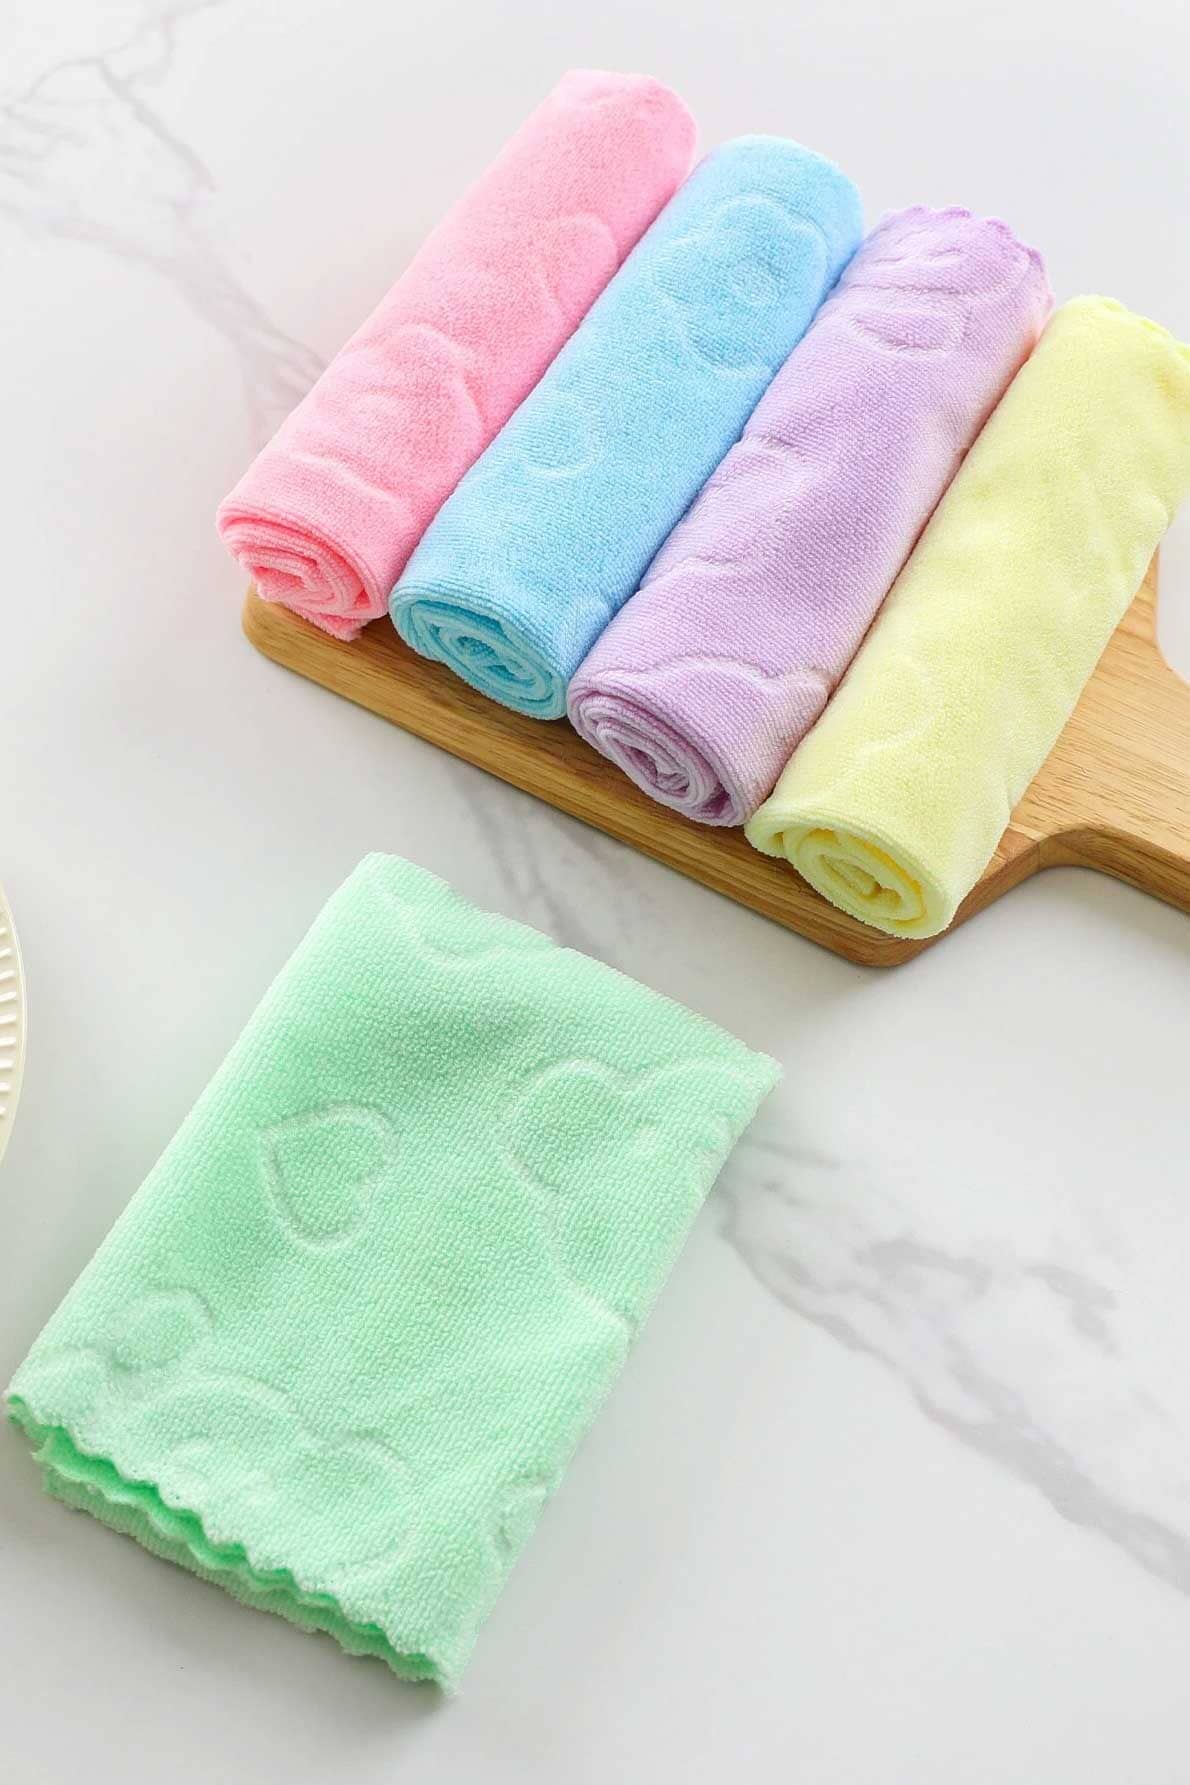 Posadas Mini Hand Towel Set - Pack Of 5